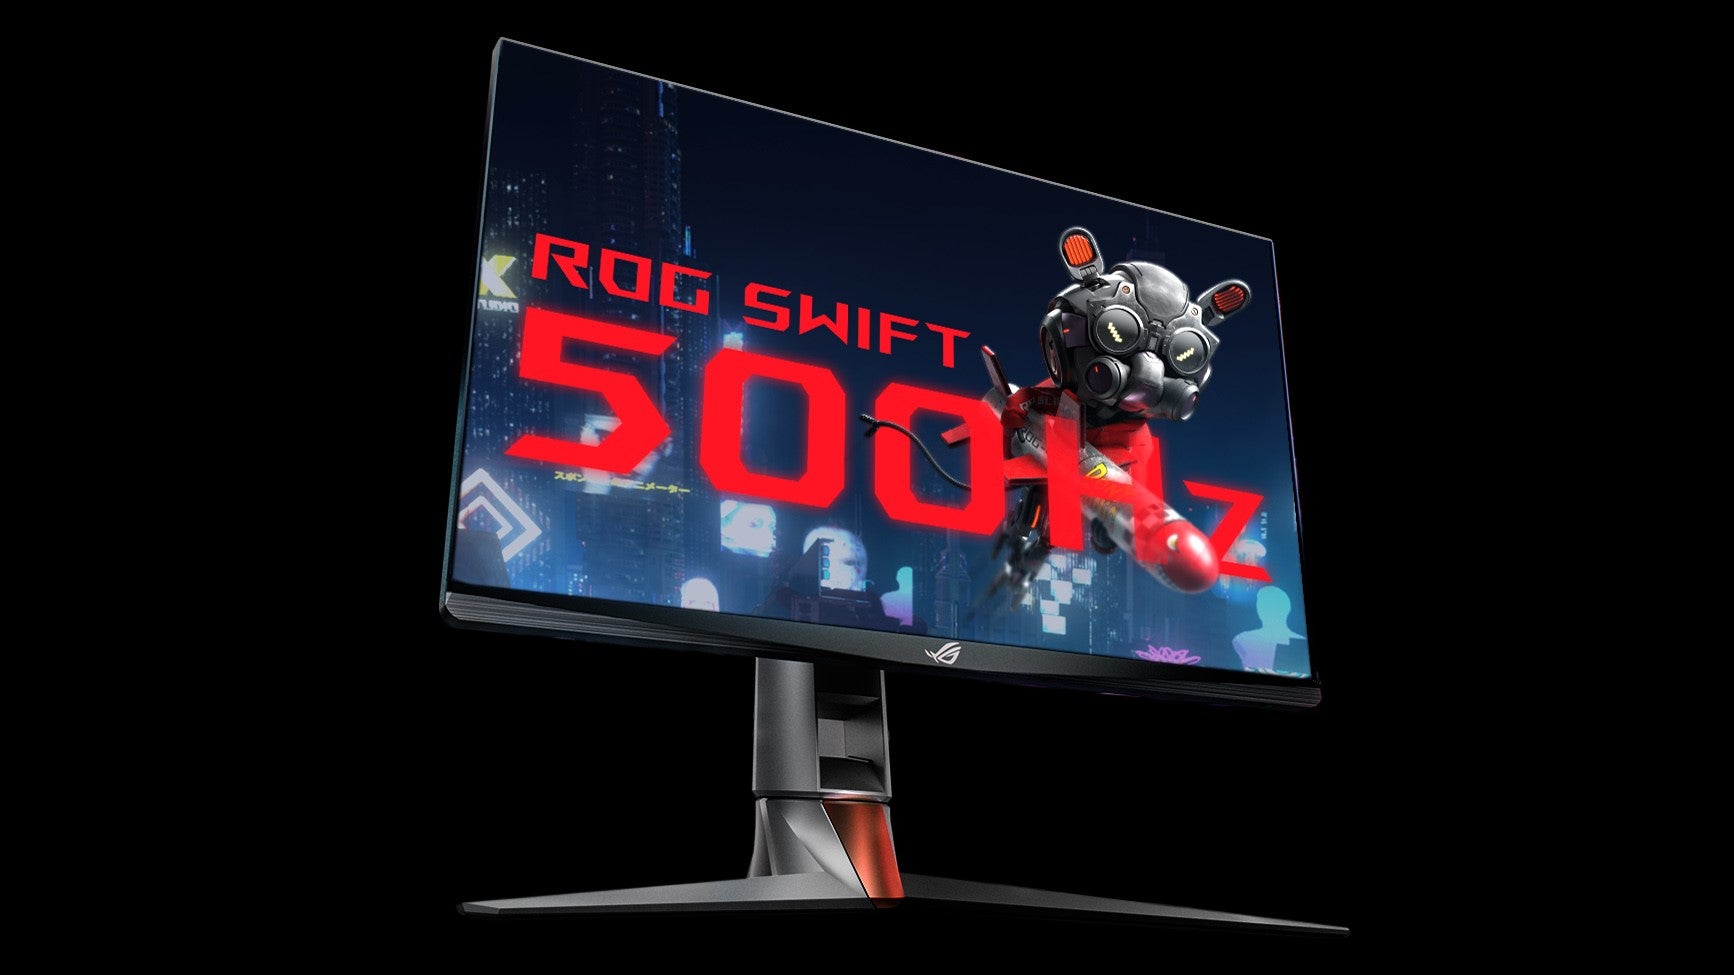 Asus ROG Swift 500Hz screen against a plain black background.